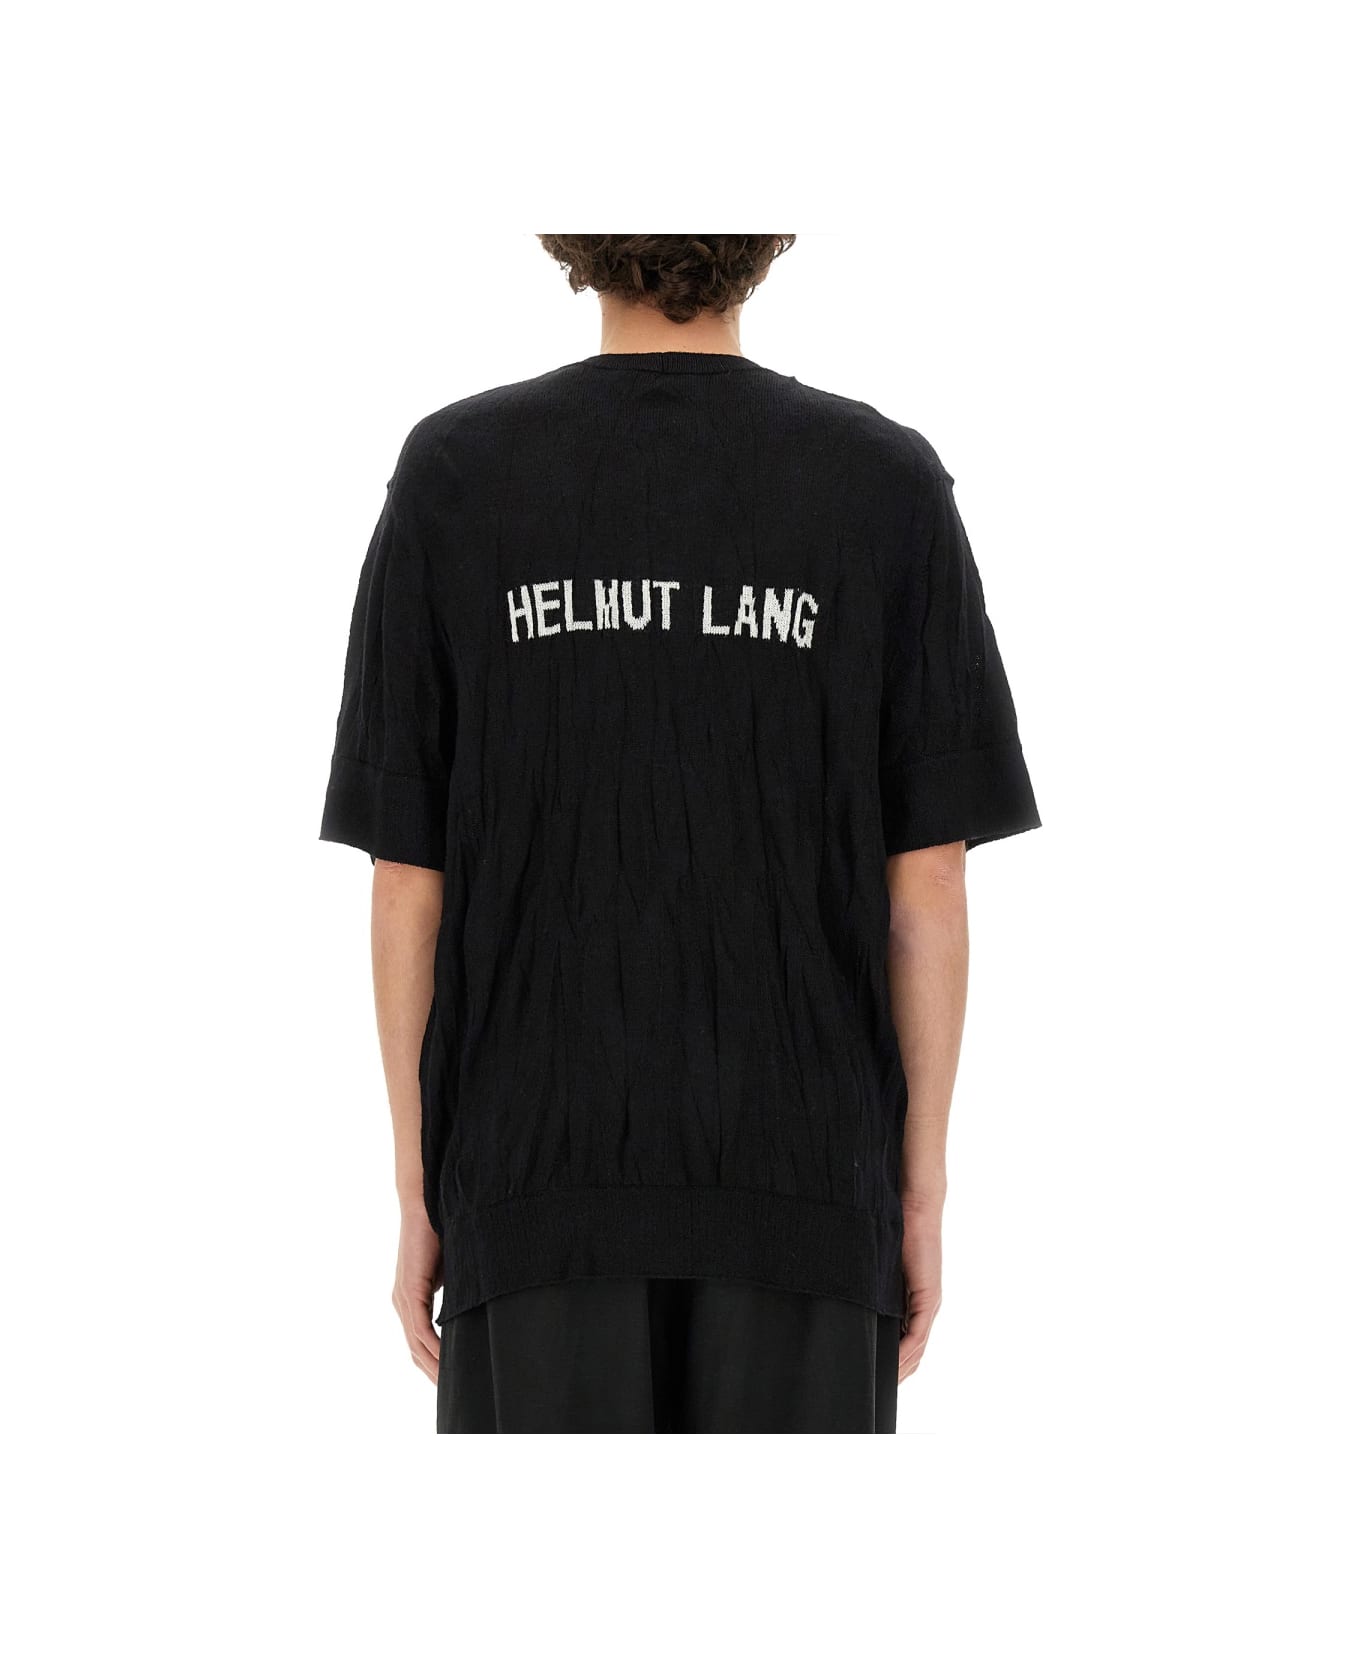 Helmut Lang Crushed Shirt - BLACK